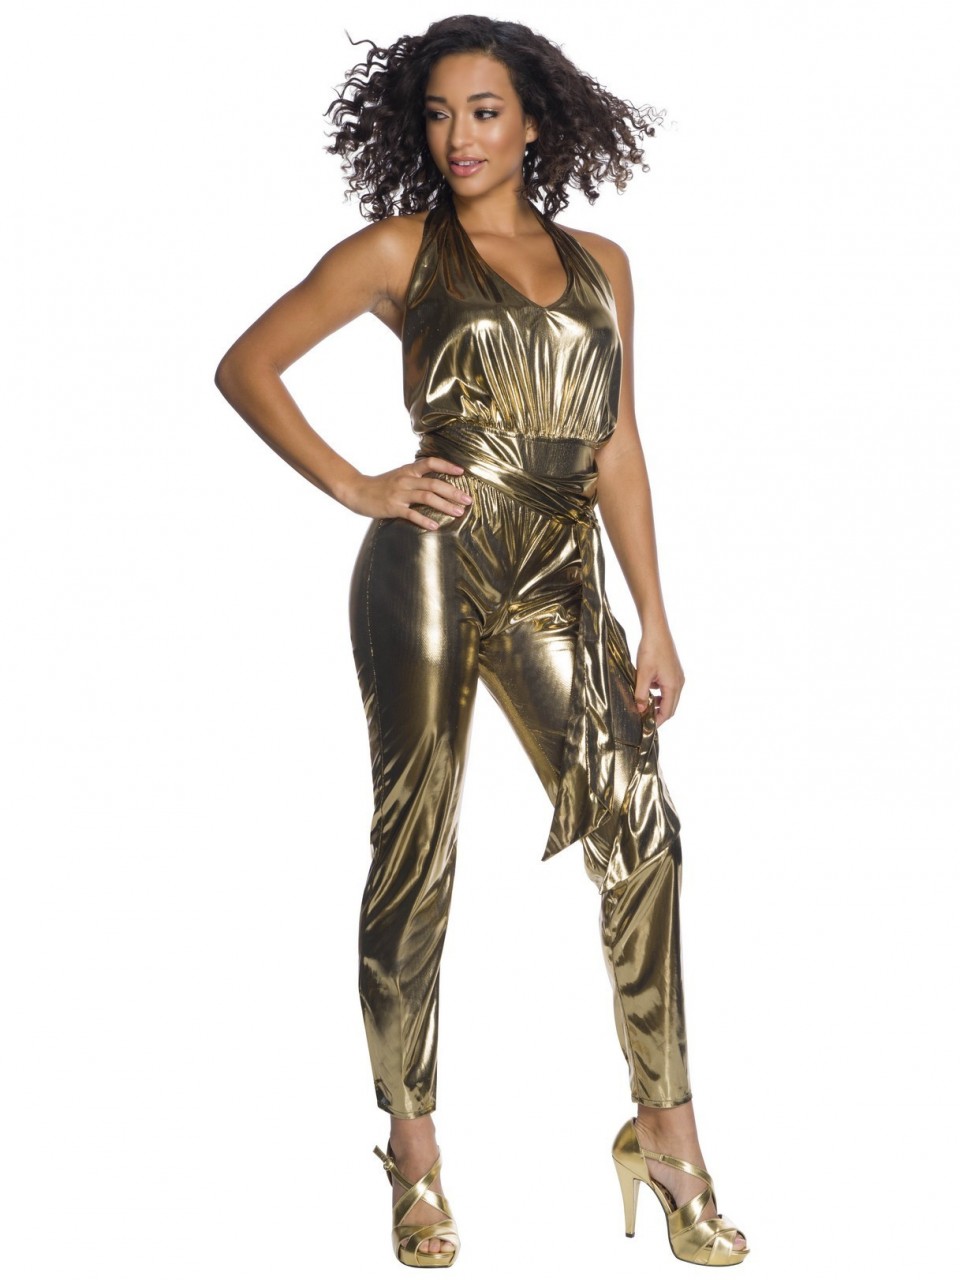 Disco Fever Queen Gold Jumpsuit Costume for Women